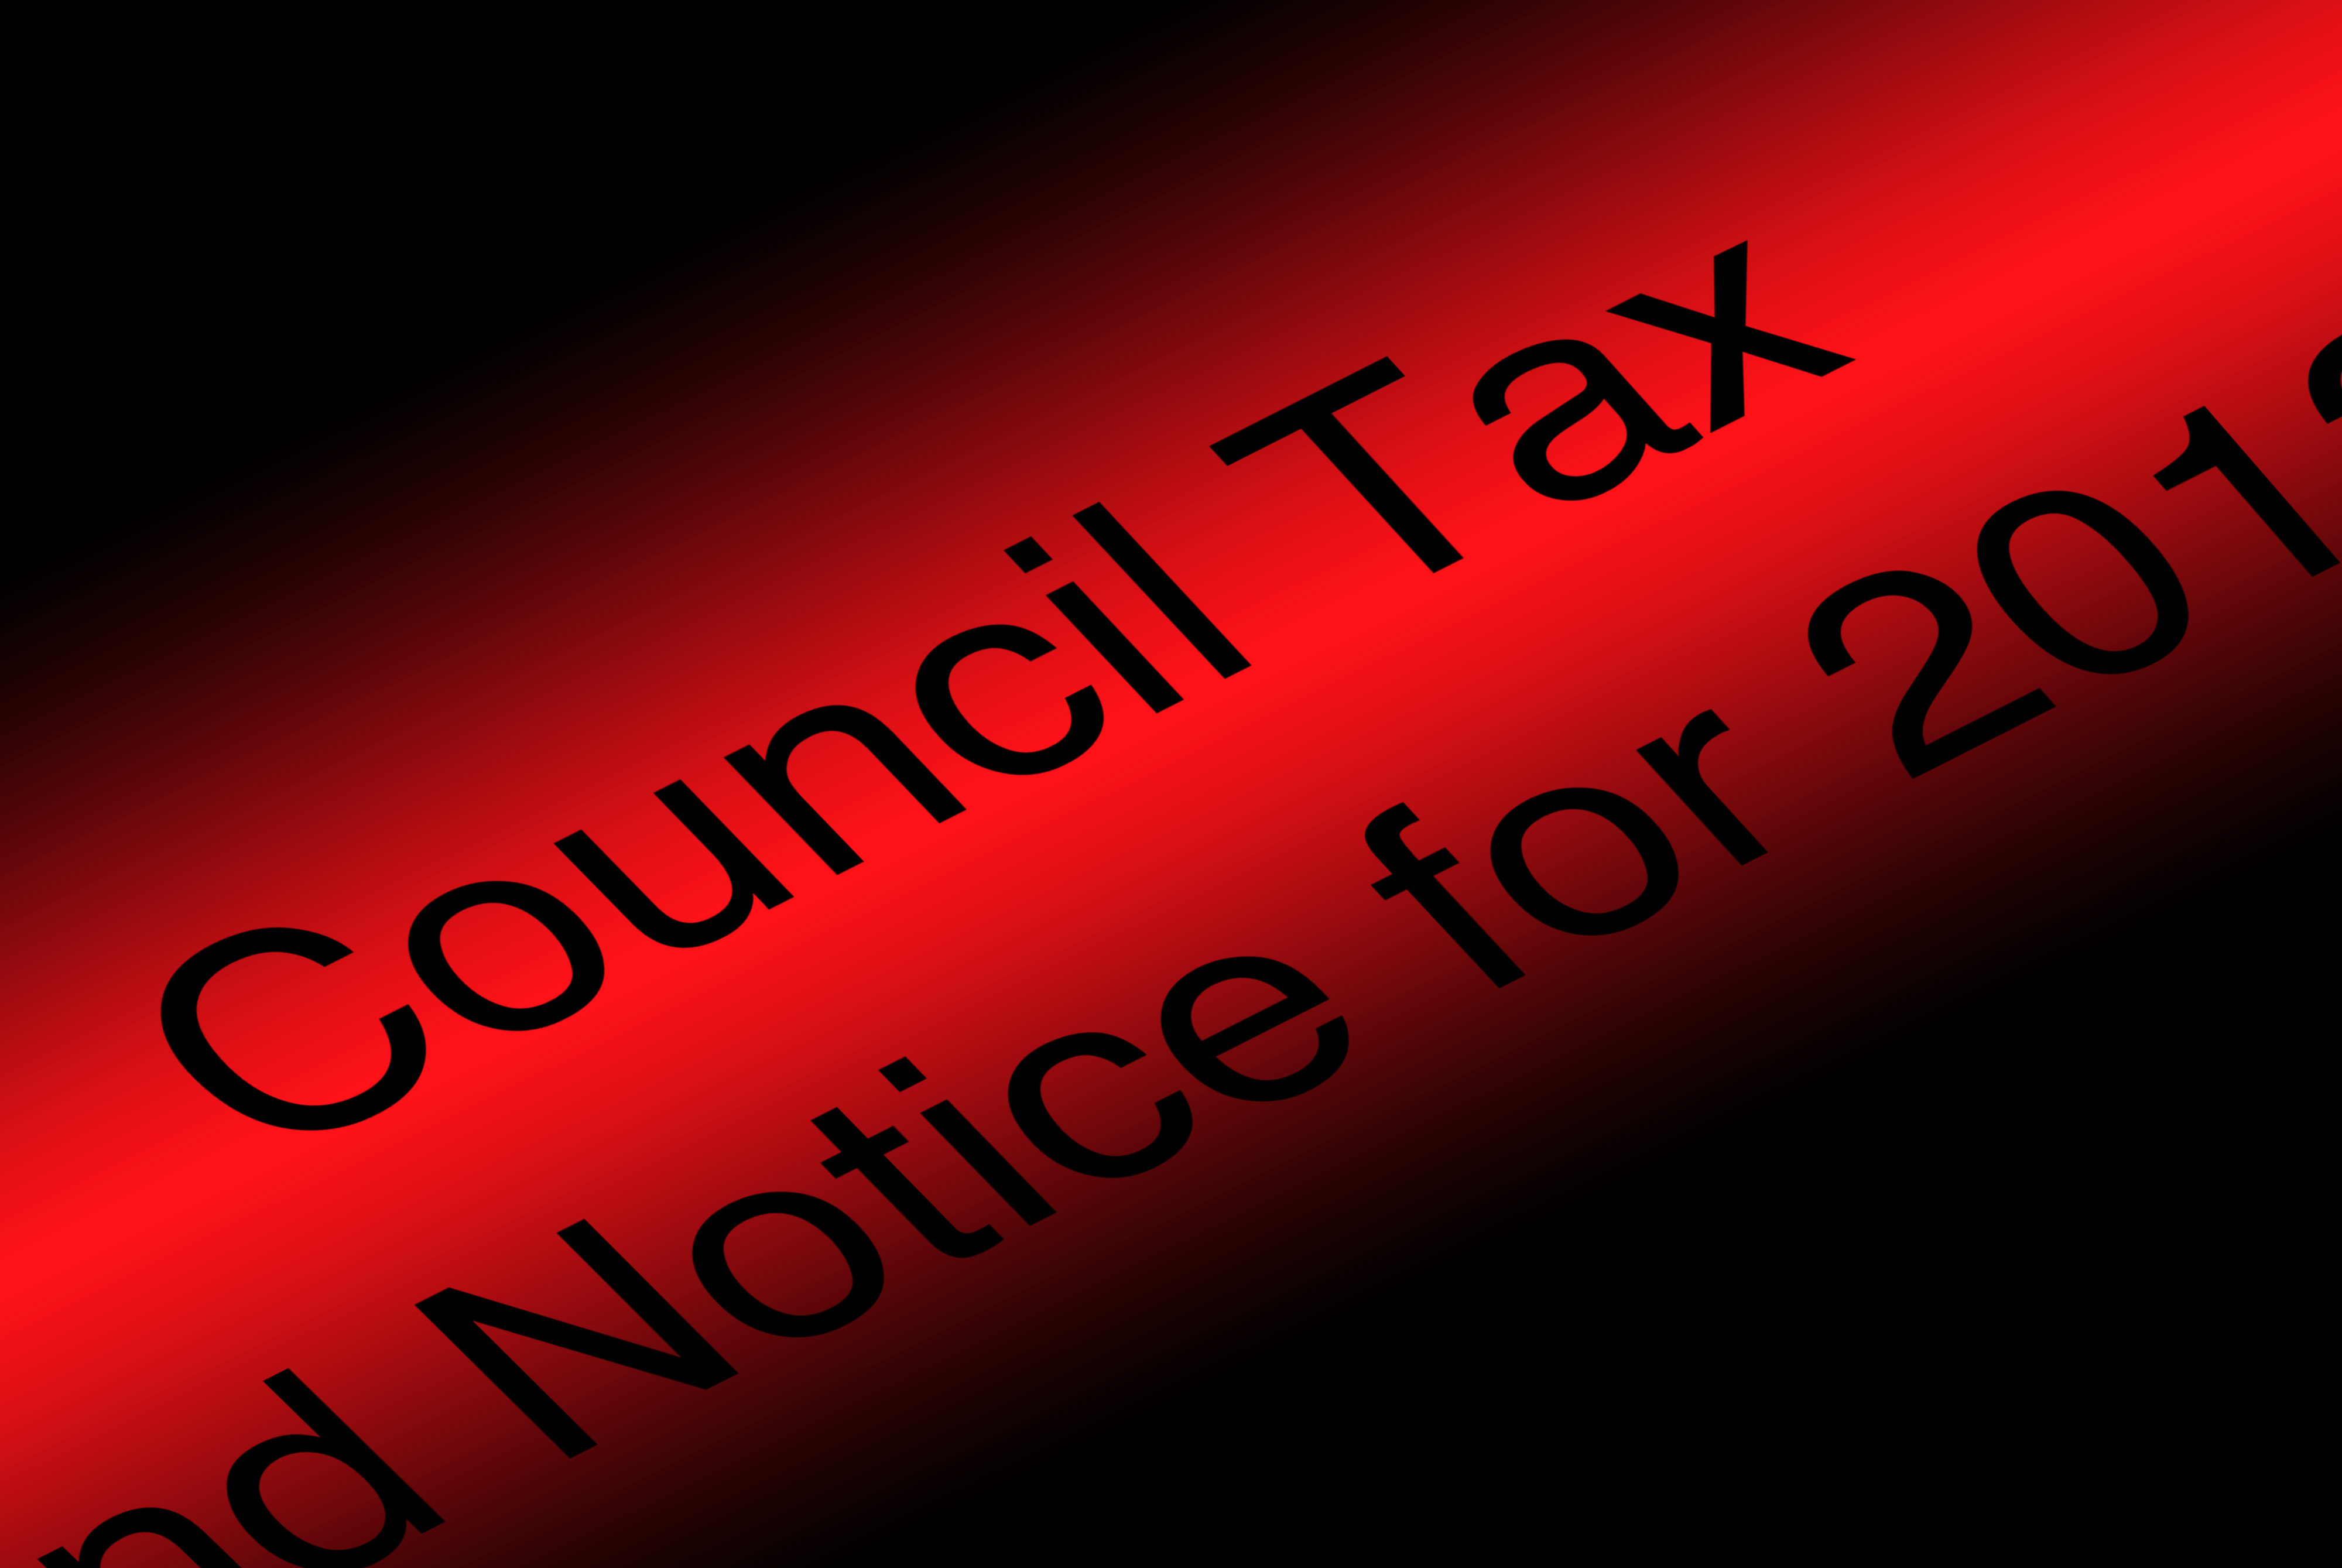 Council Tax notice